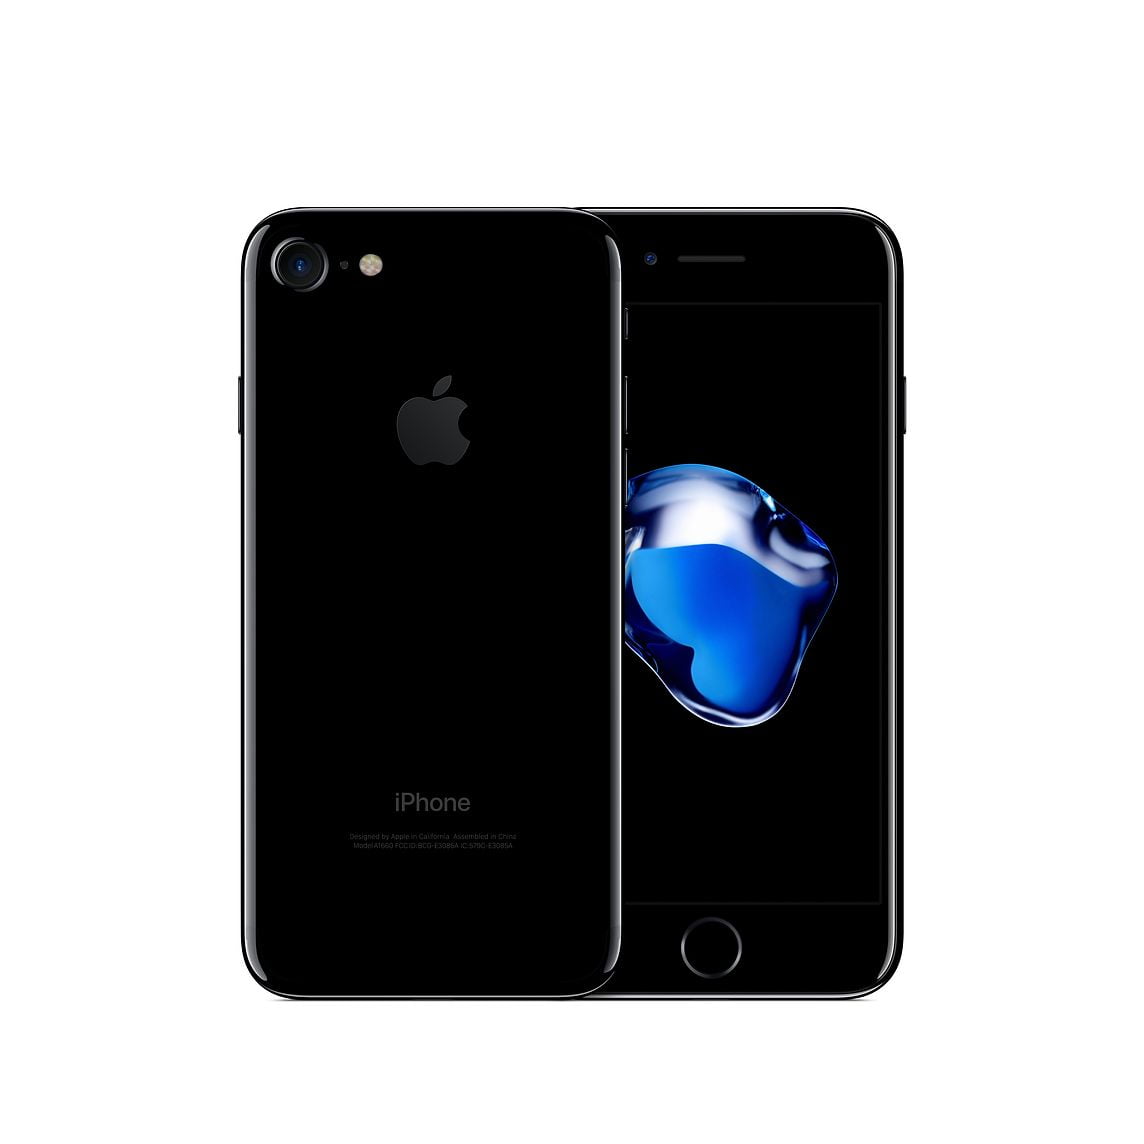 Apple iPhone 7 32GB Jet Black B Grade Refurbished GSM Unlocked Smartphone